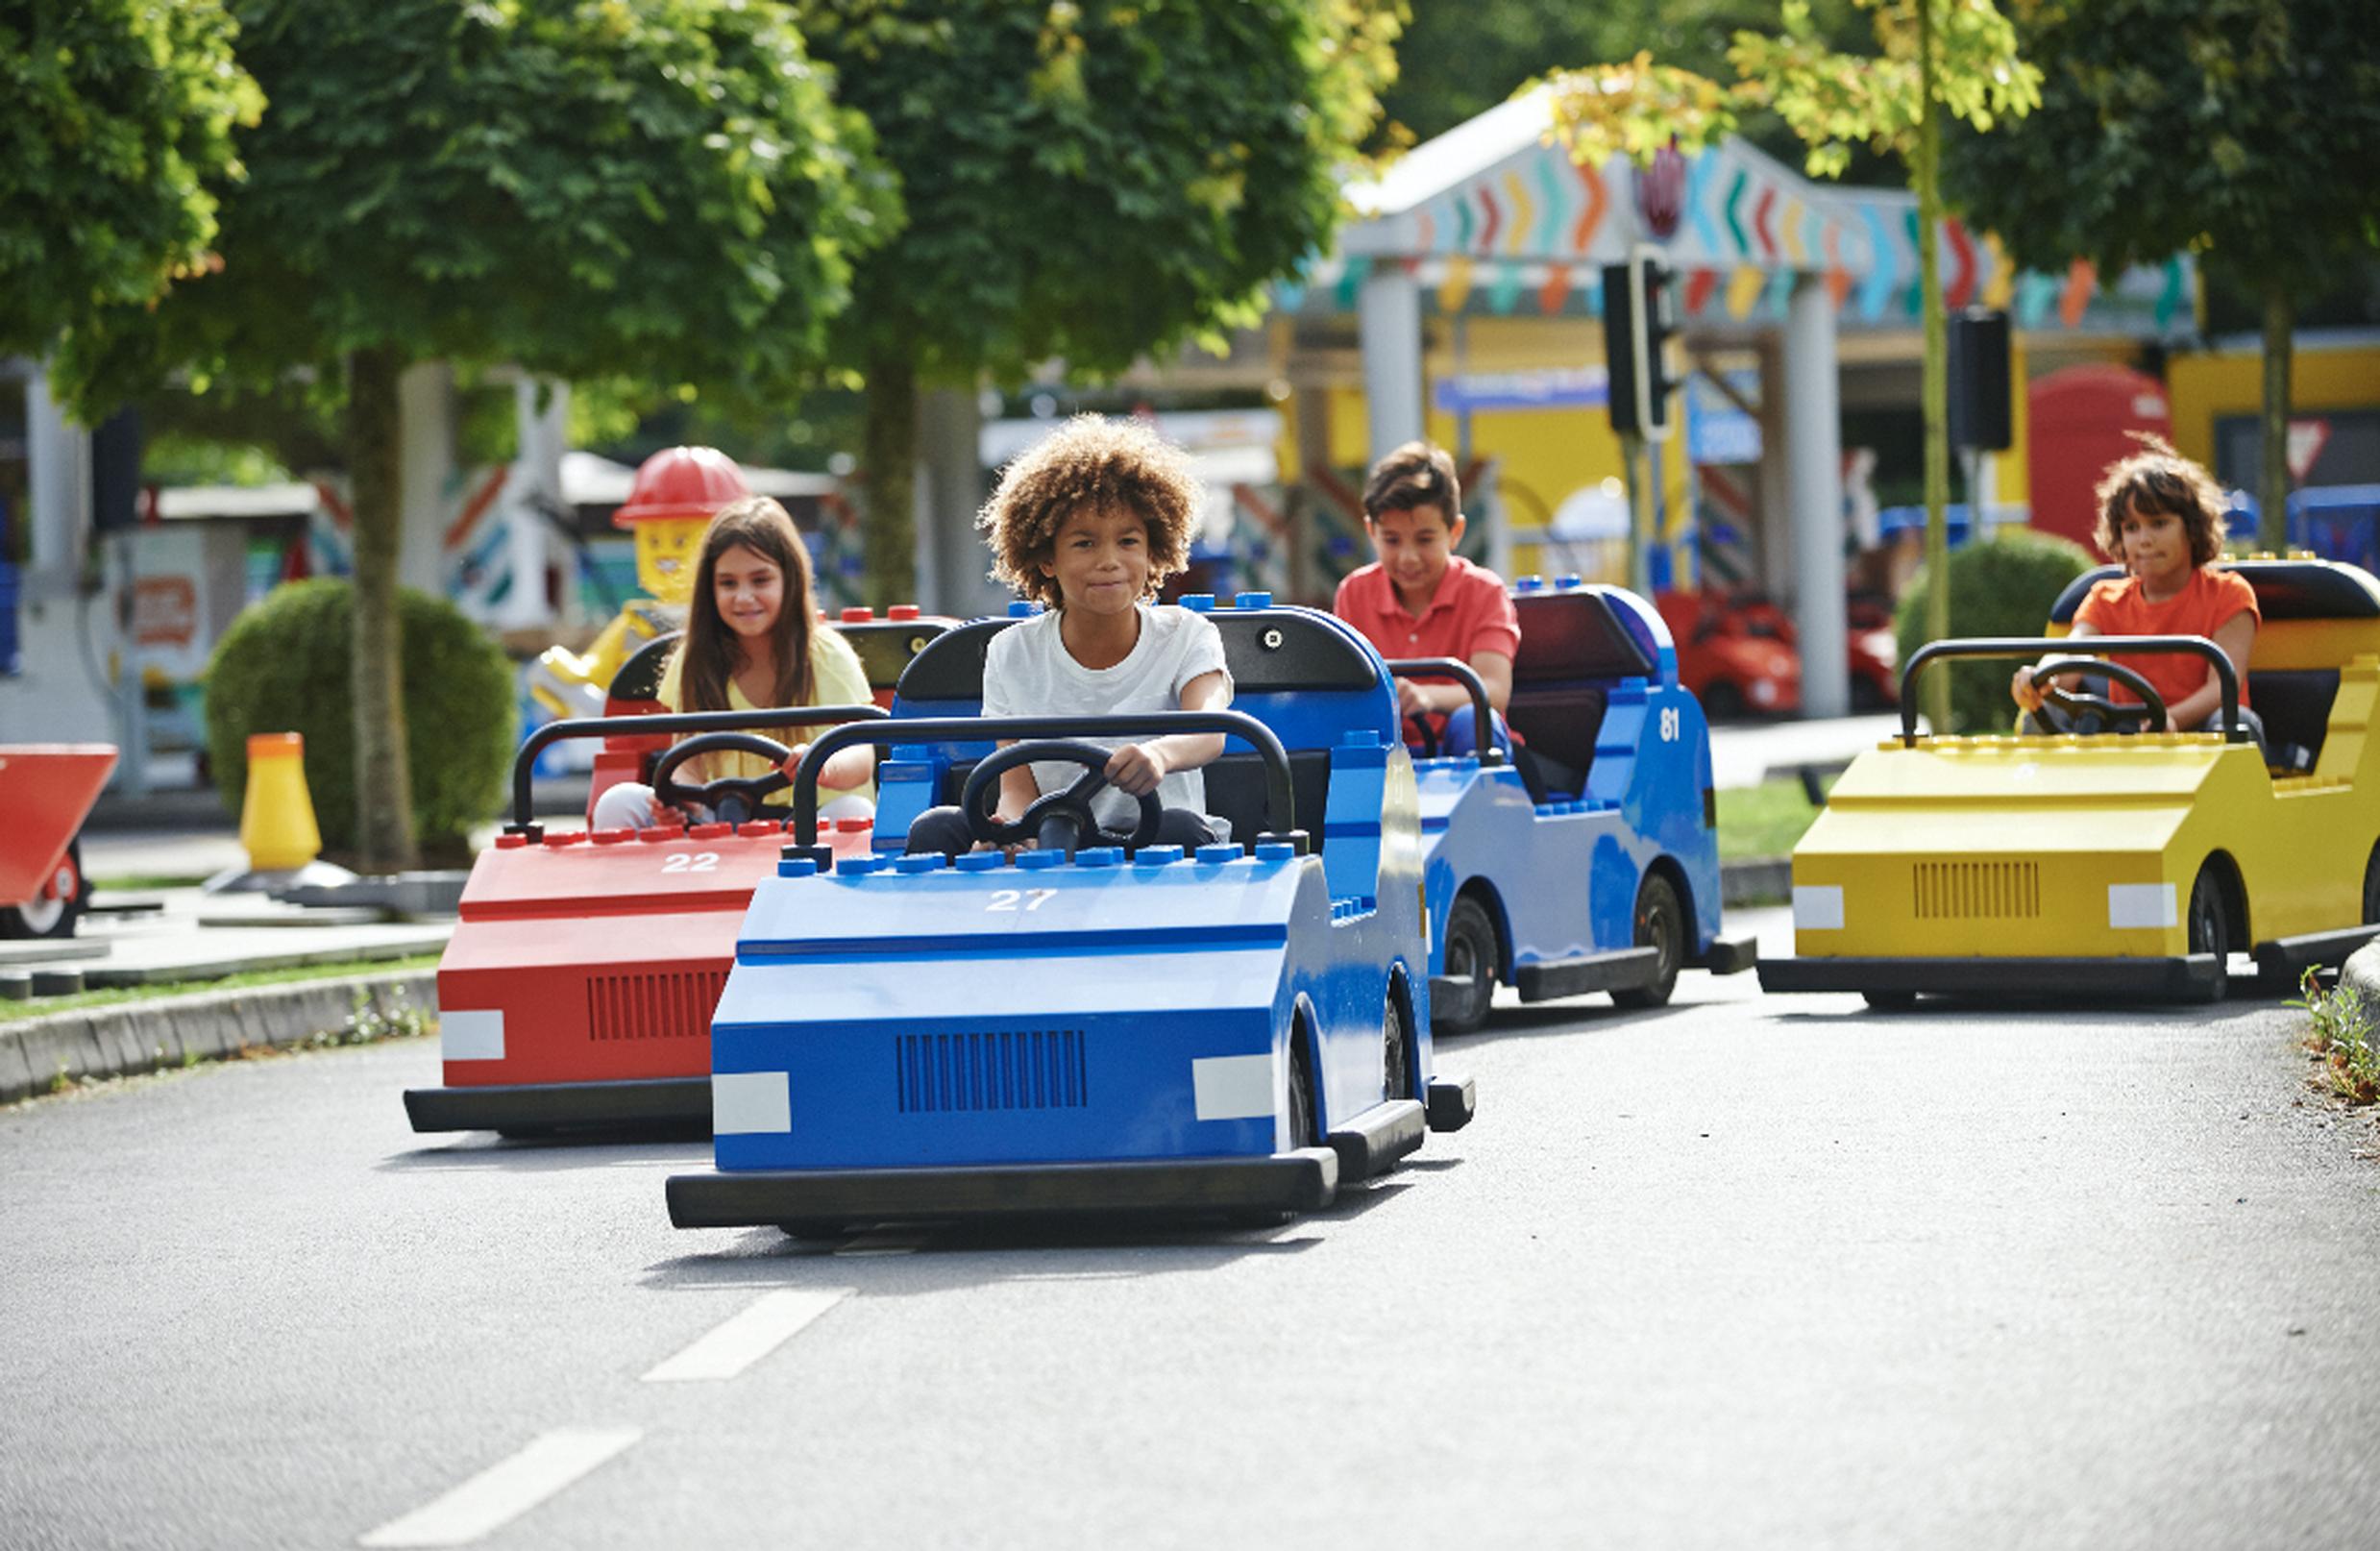 The driving school at Legoland Windsor